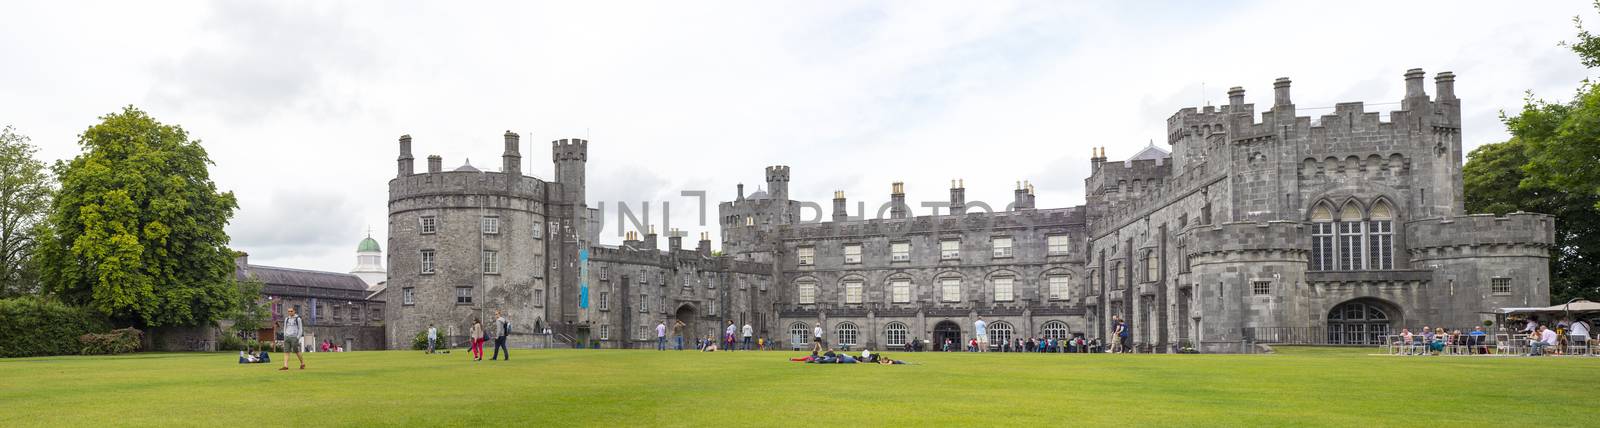 Historic castle and gardens in kilkenny Ireland